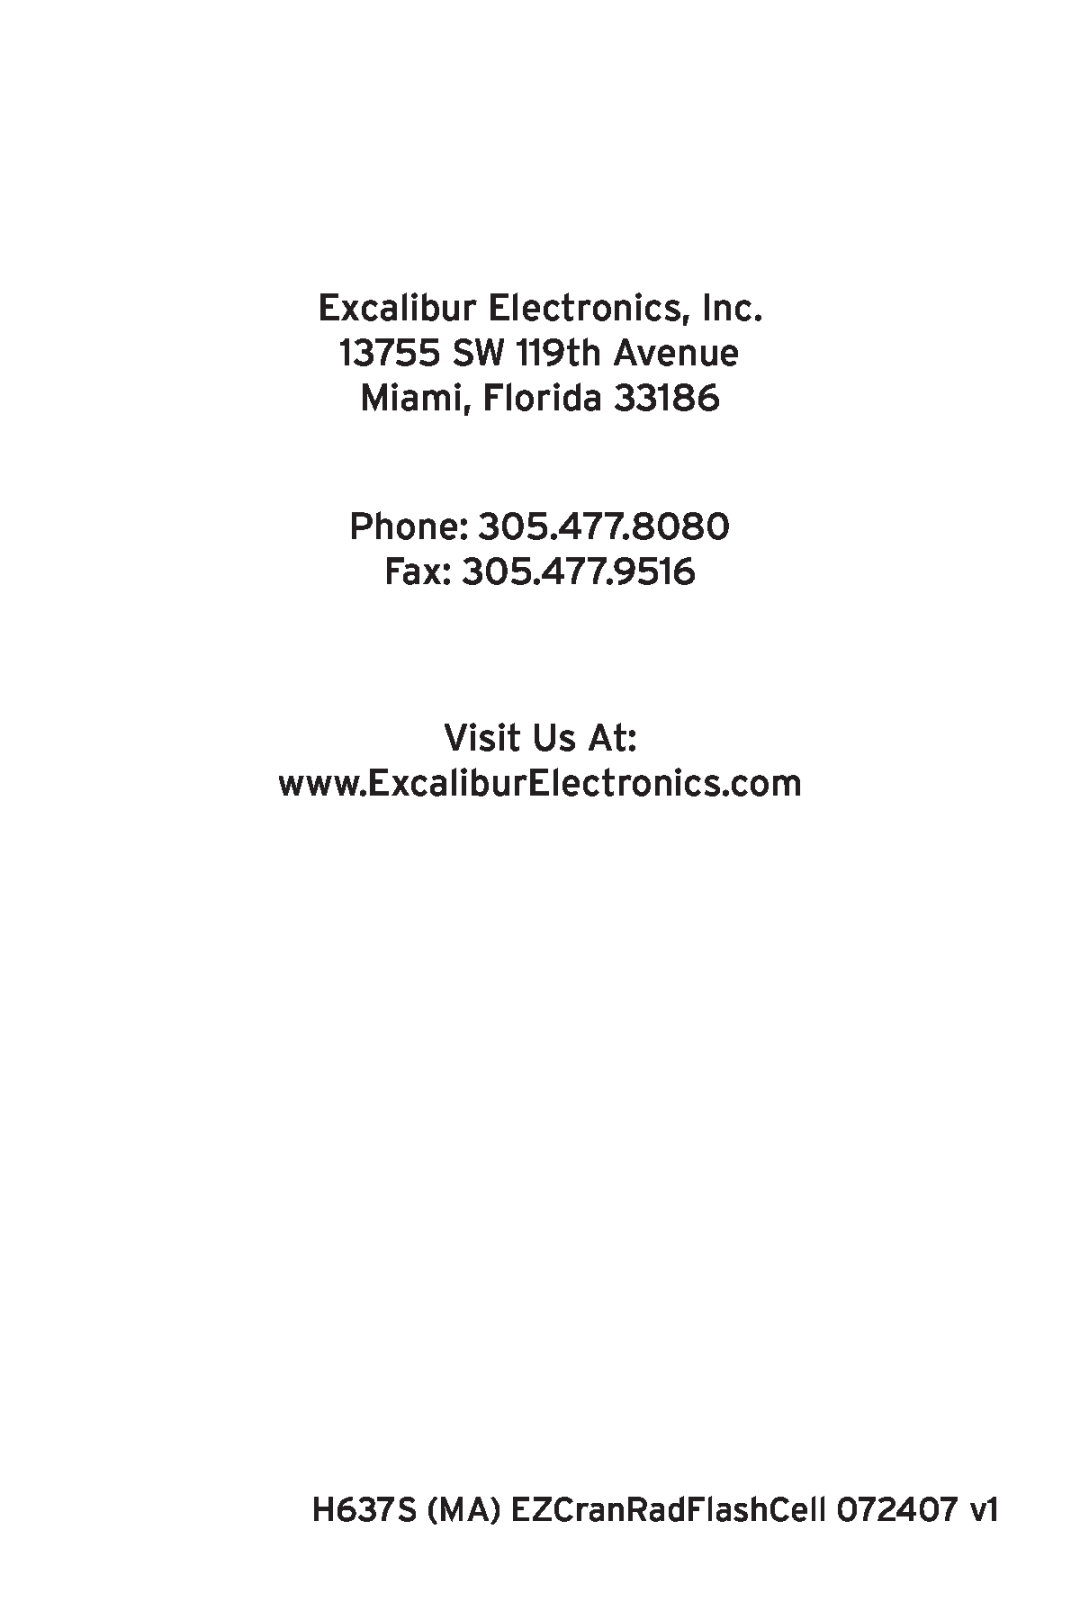 Excalibur electronic H637S Excalibur Electronics, Inc 13755 SW 119th Avenue, Miami, Florida Phone Fax Visit Us At 